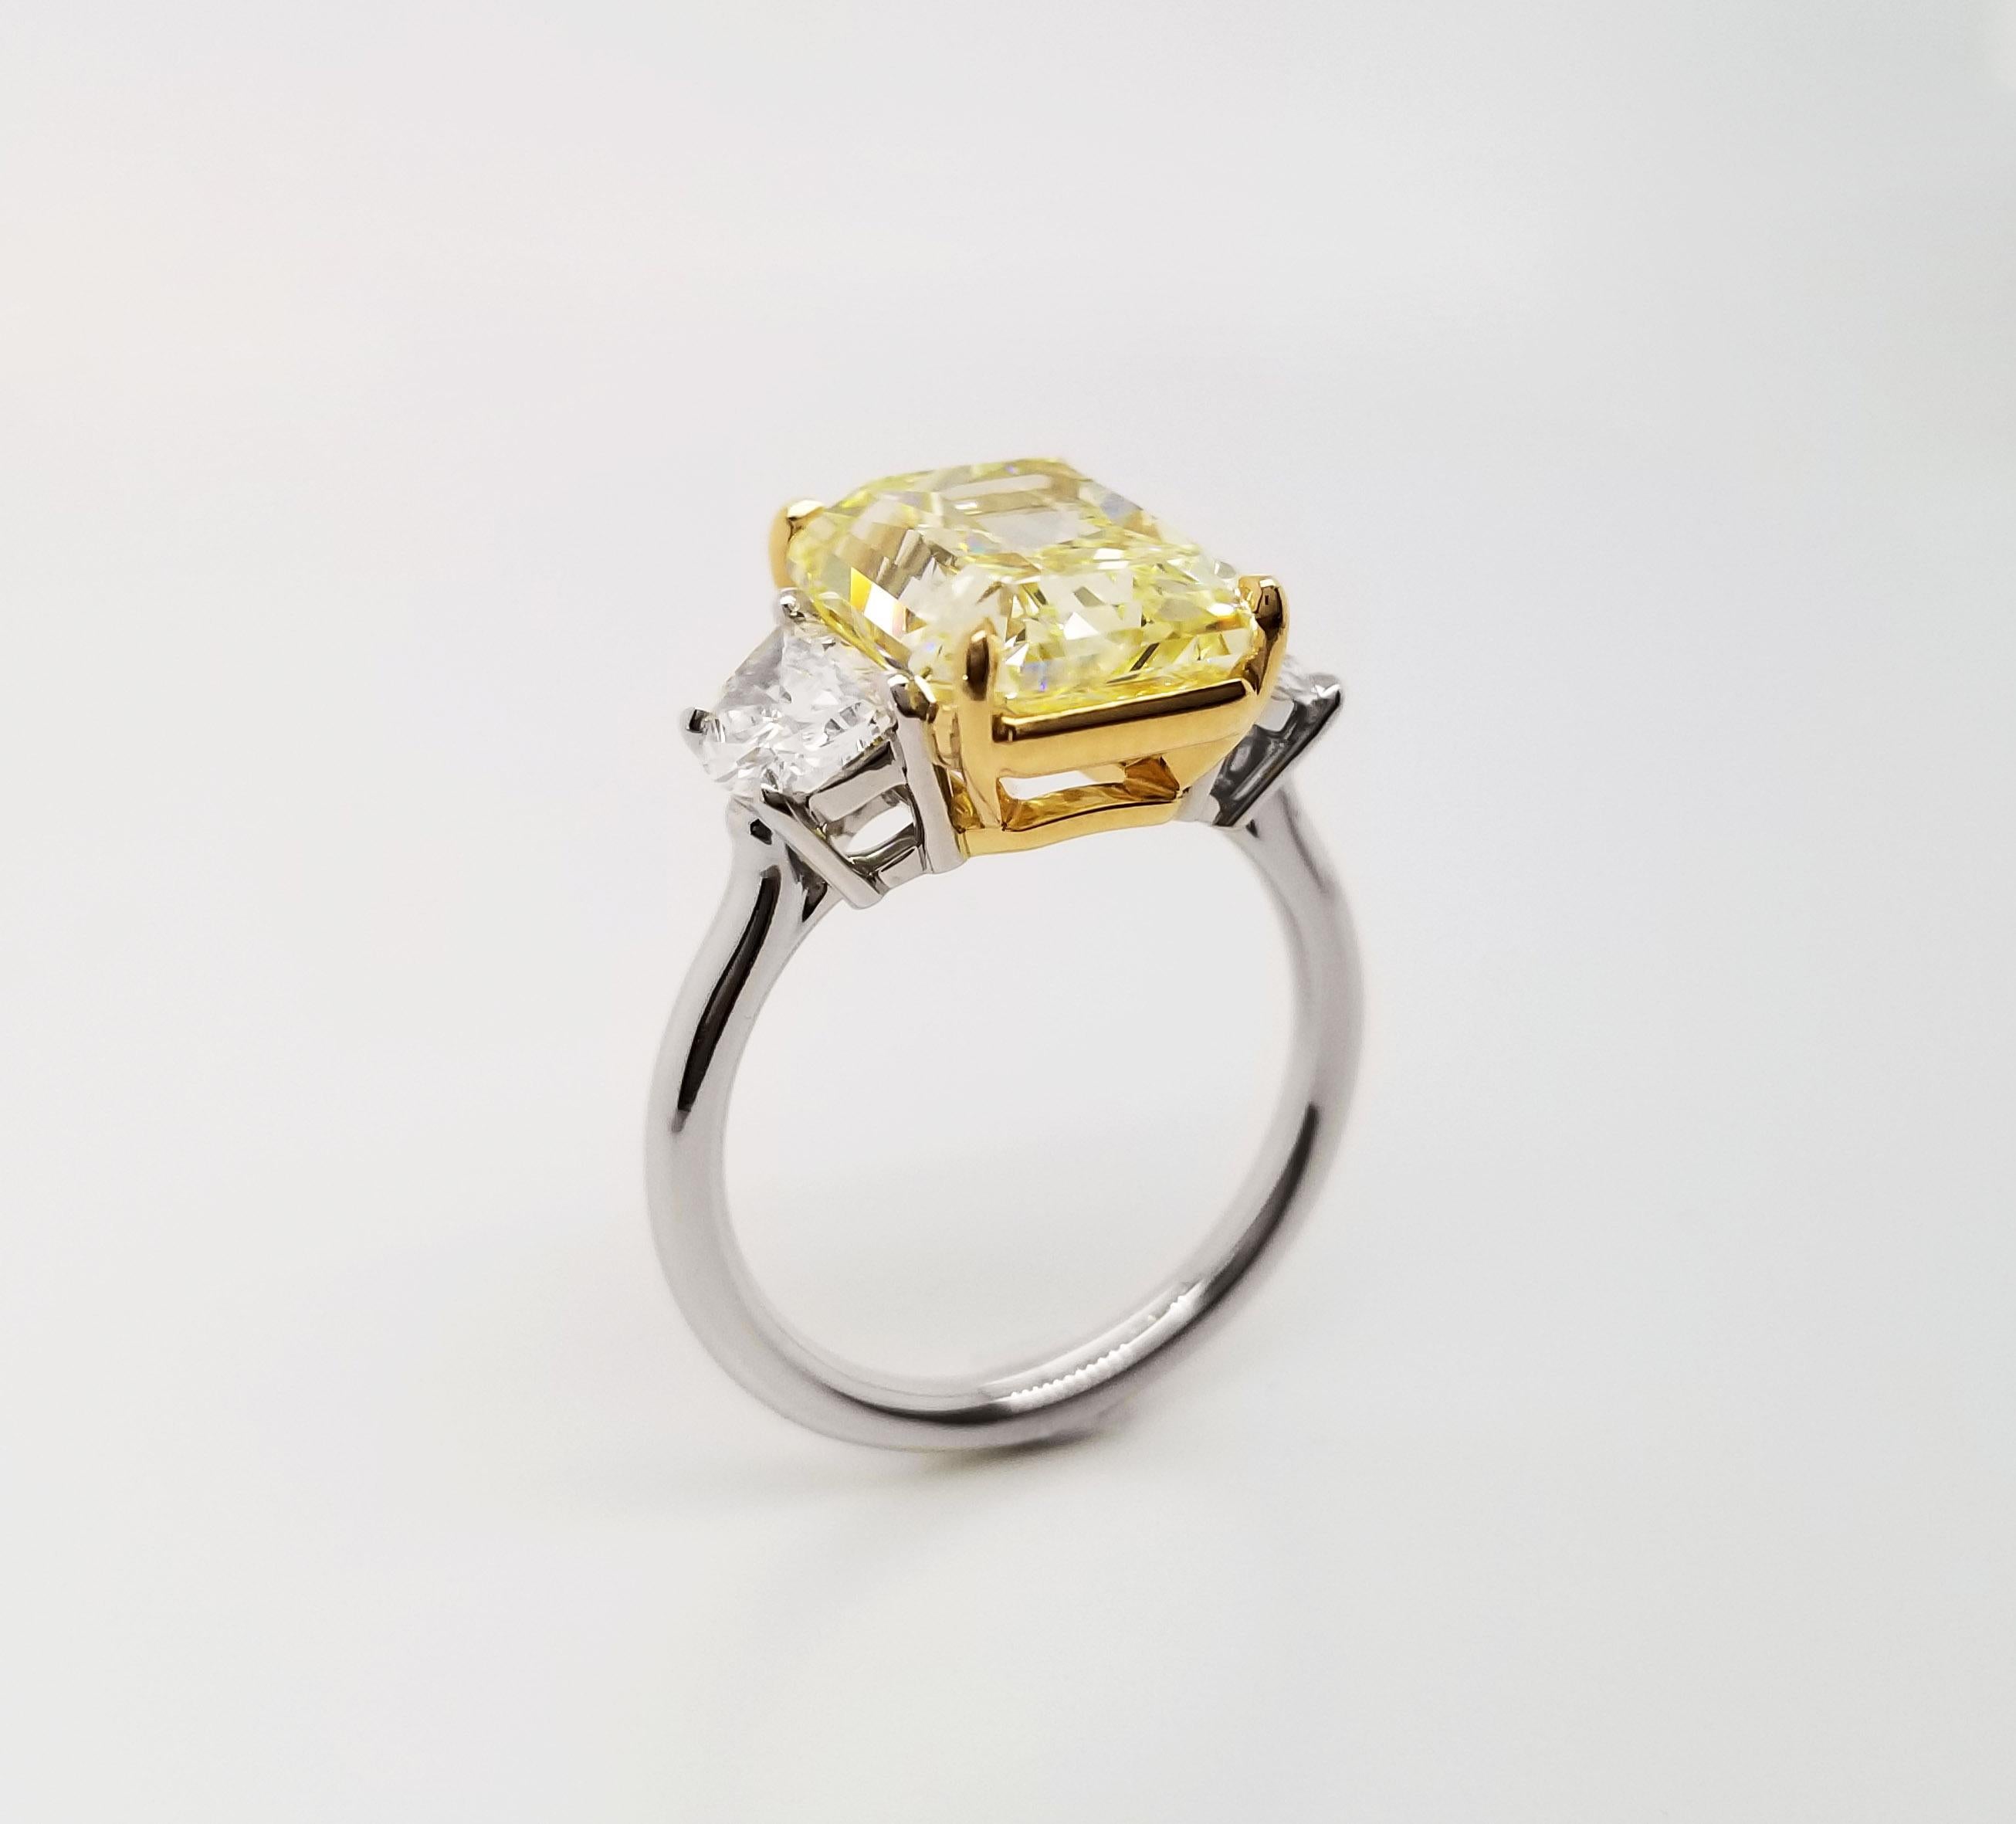 Radiant Cut Scarselli 6 Carat Fancy Yellow Diamond Engagement Ring GIA